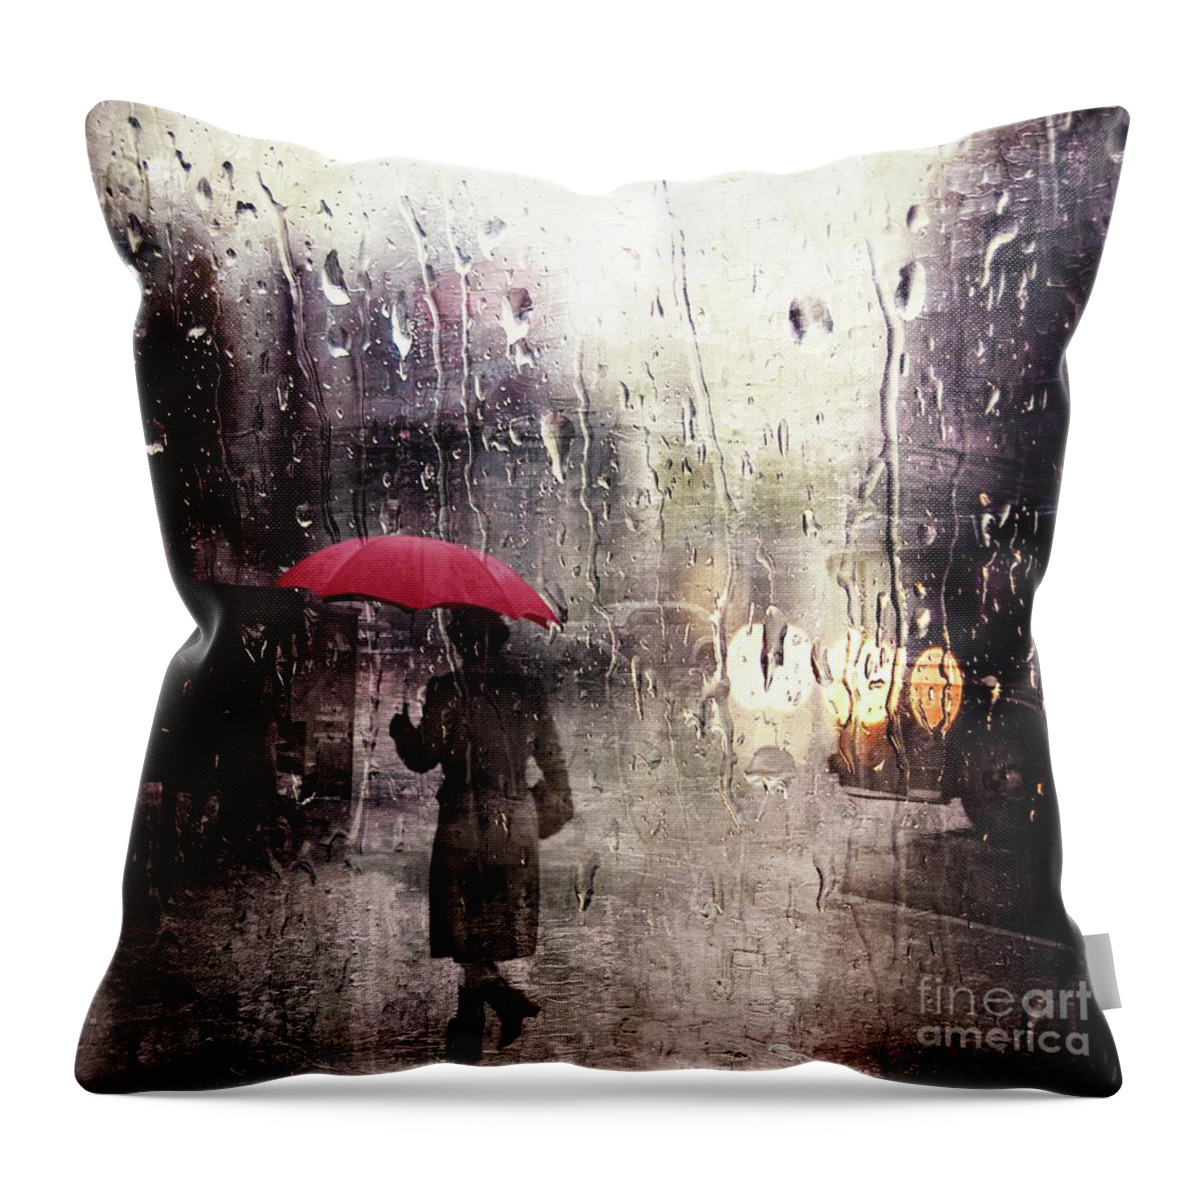 Walking In The Rain Somewhere Throw Pillow featuring the photograph Walking in the Rain Somewhere by Carlos Diaz